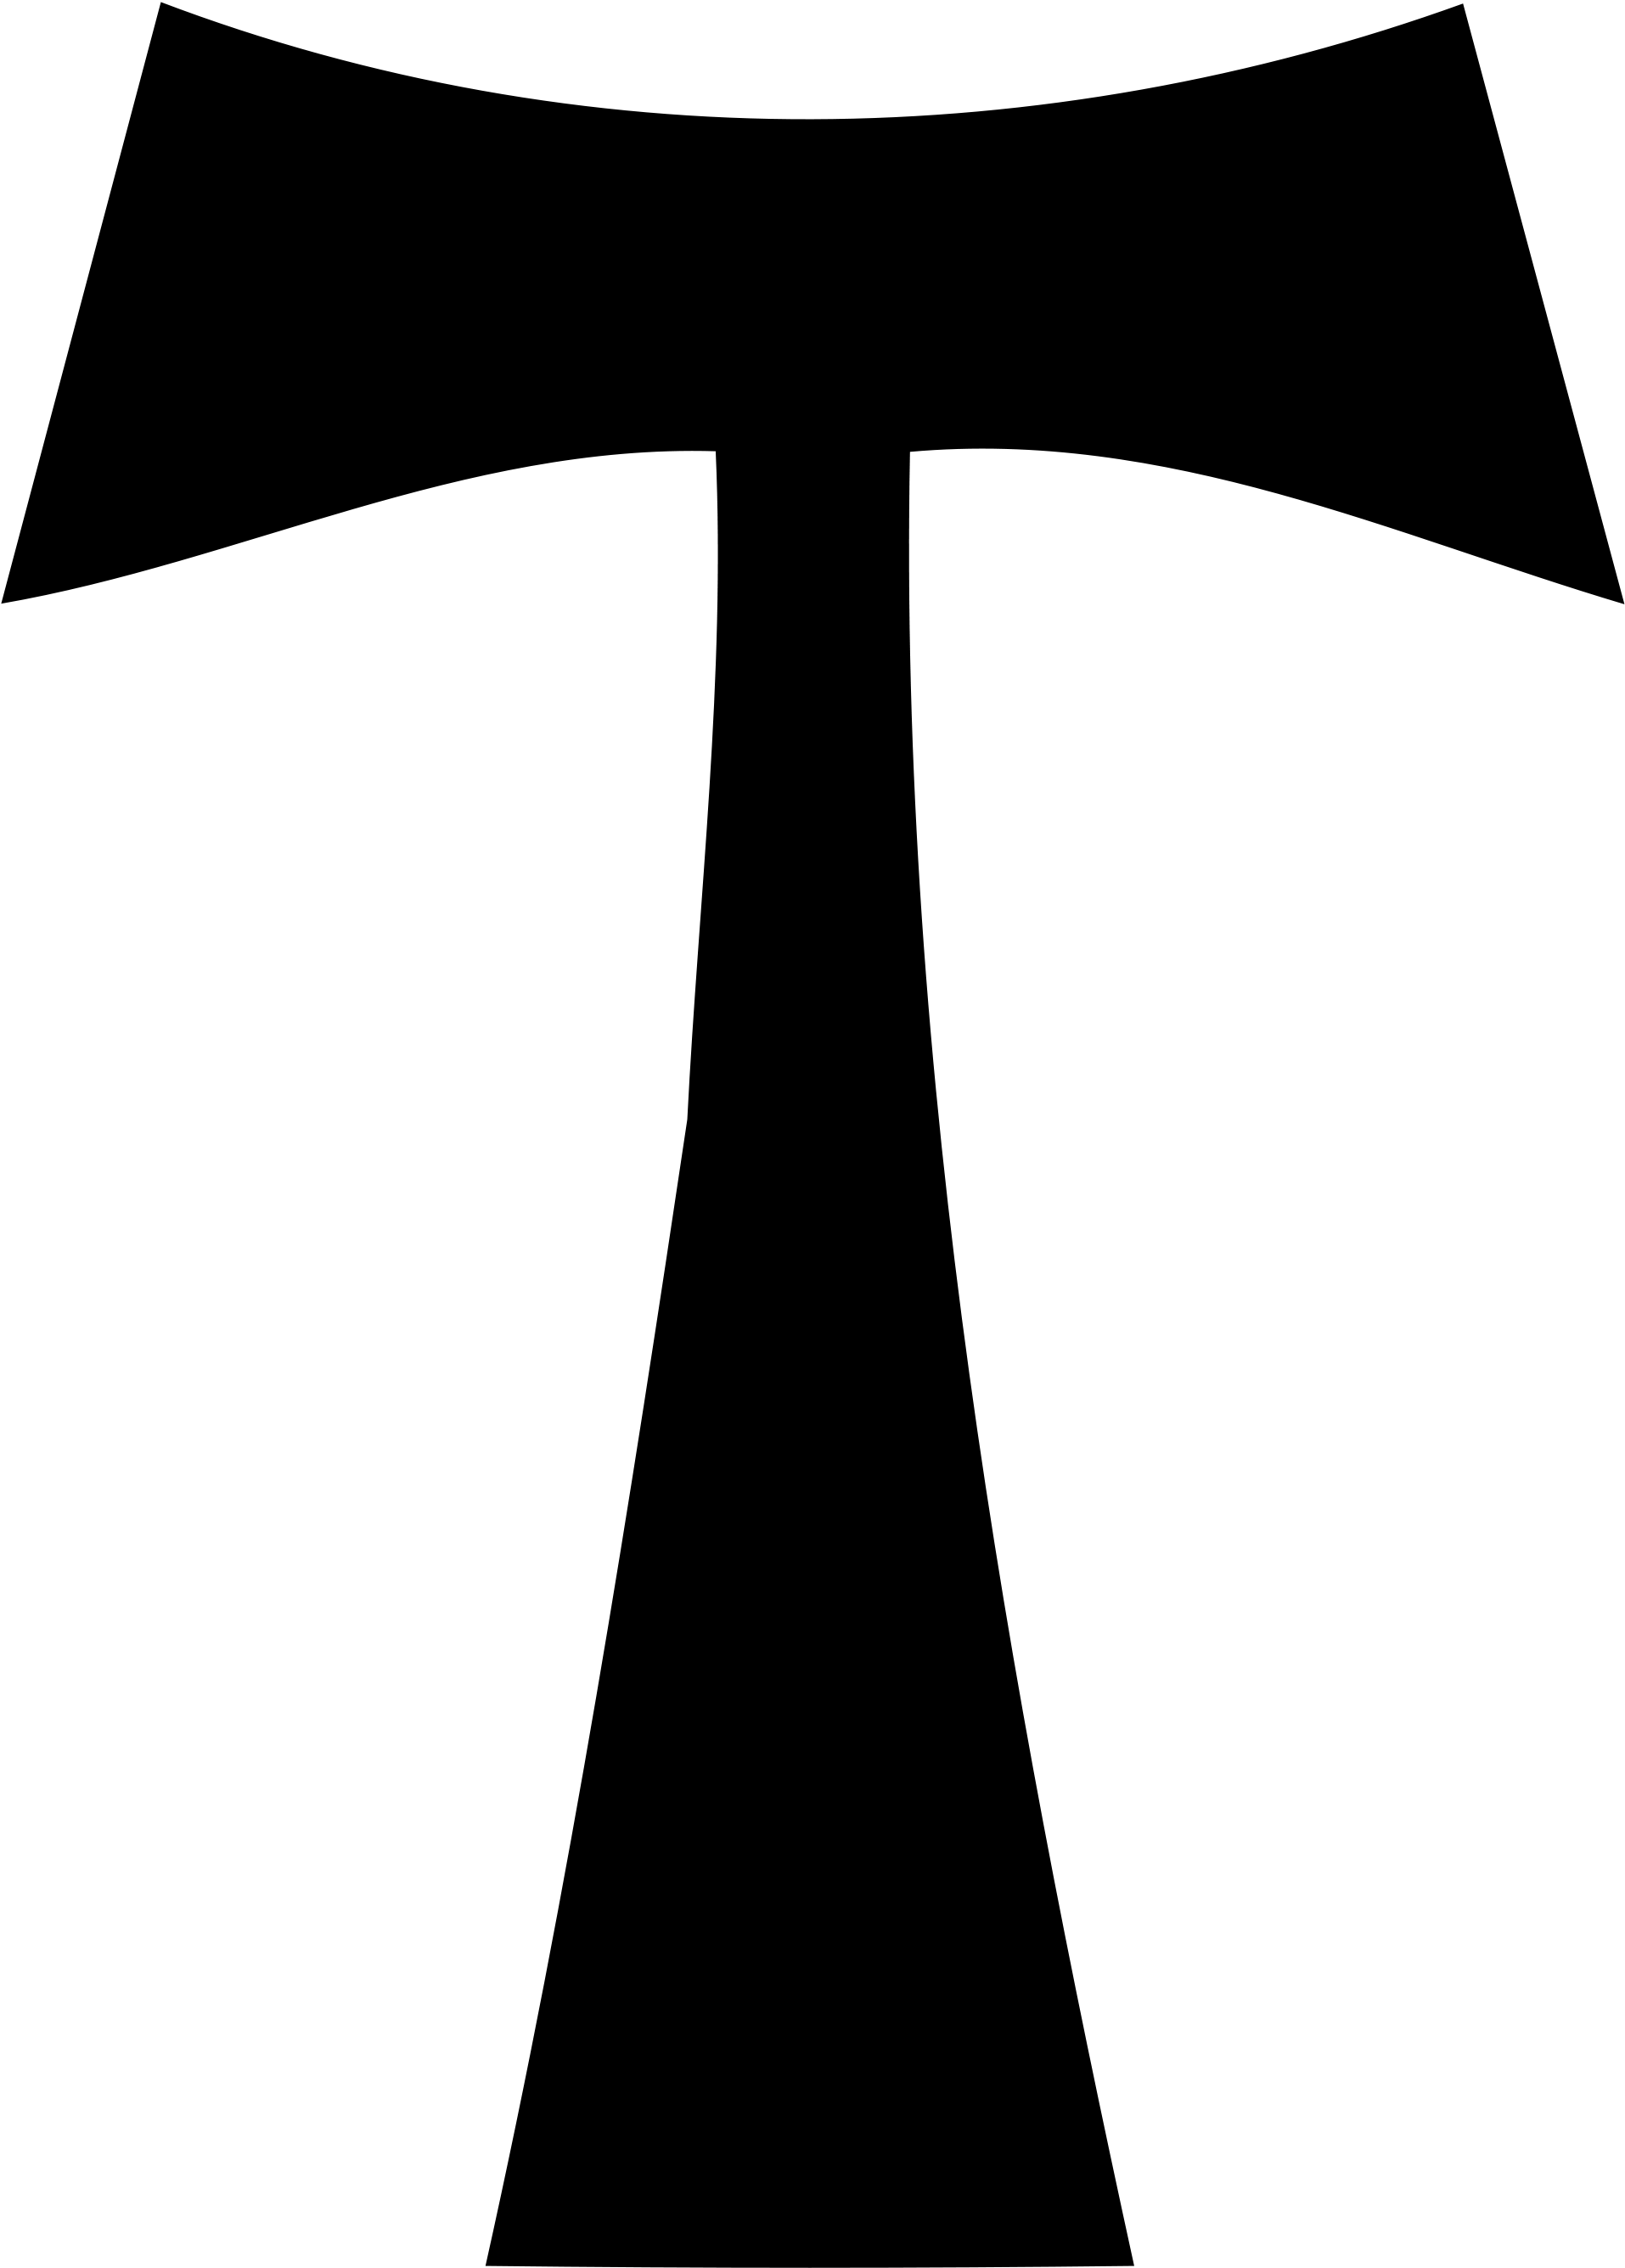 Open - Tau Cross (2000x2852)